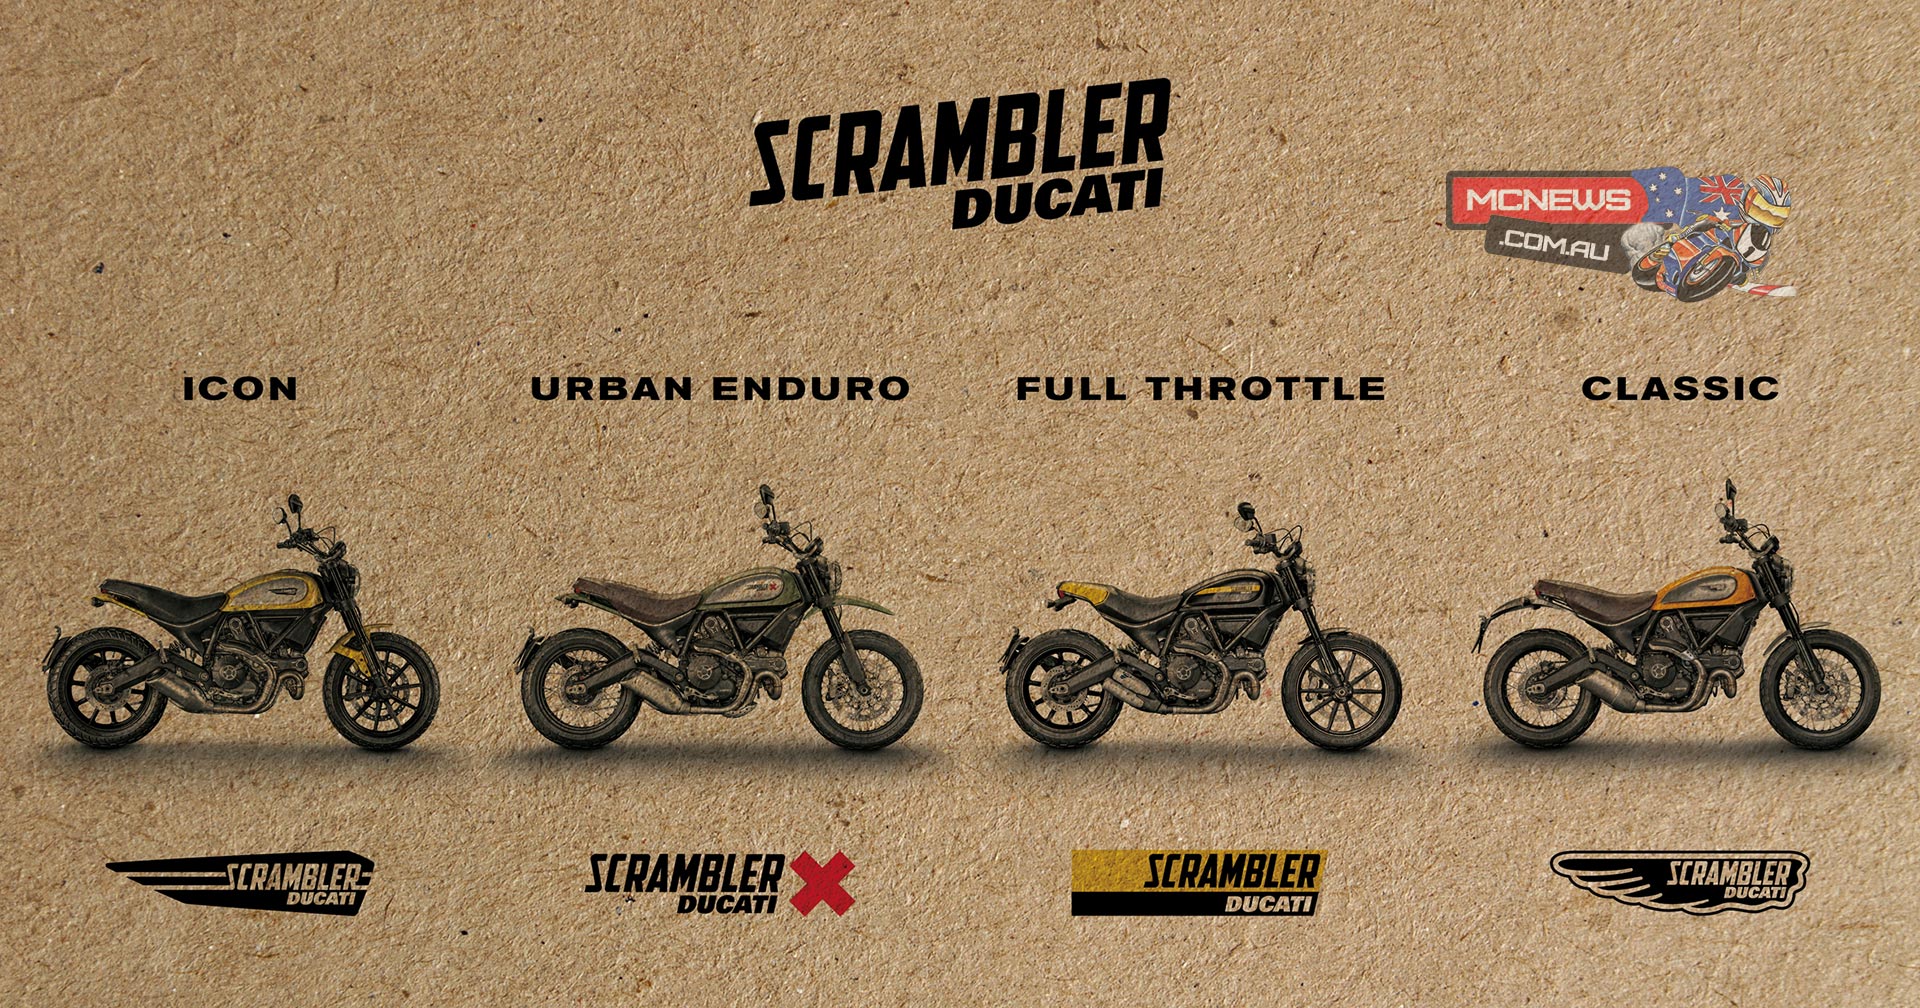 Ducati Scrambler Prices Slashed: The Prices of Scrambler Range Slashed by Rs 90,000